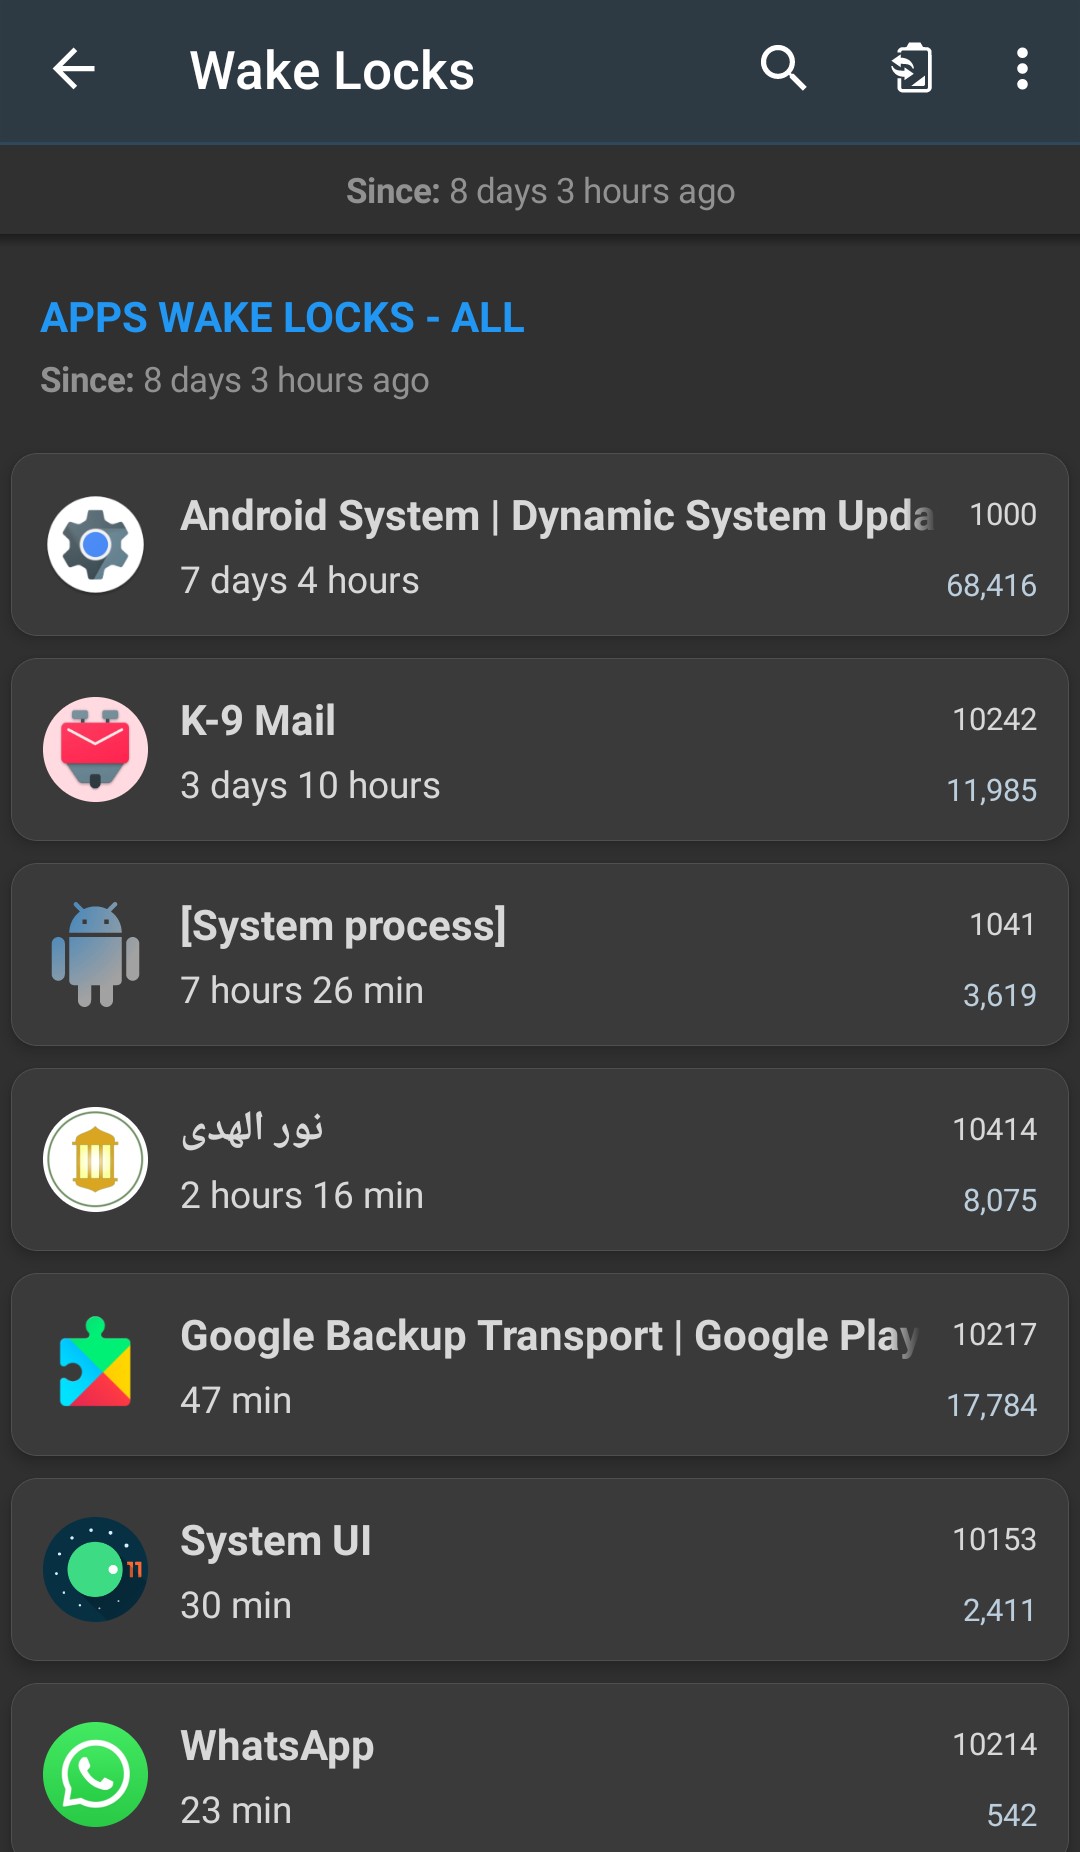 Android wake locks all